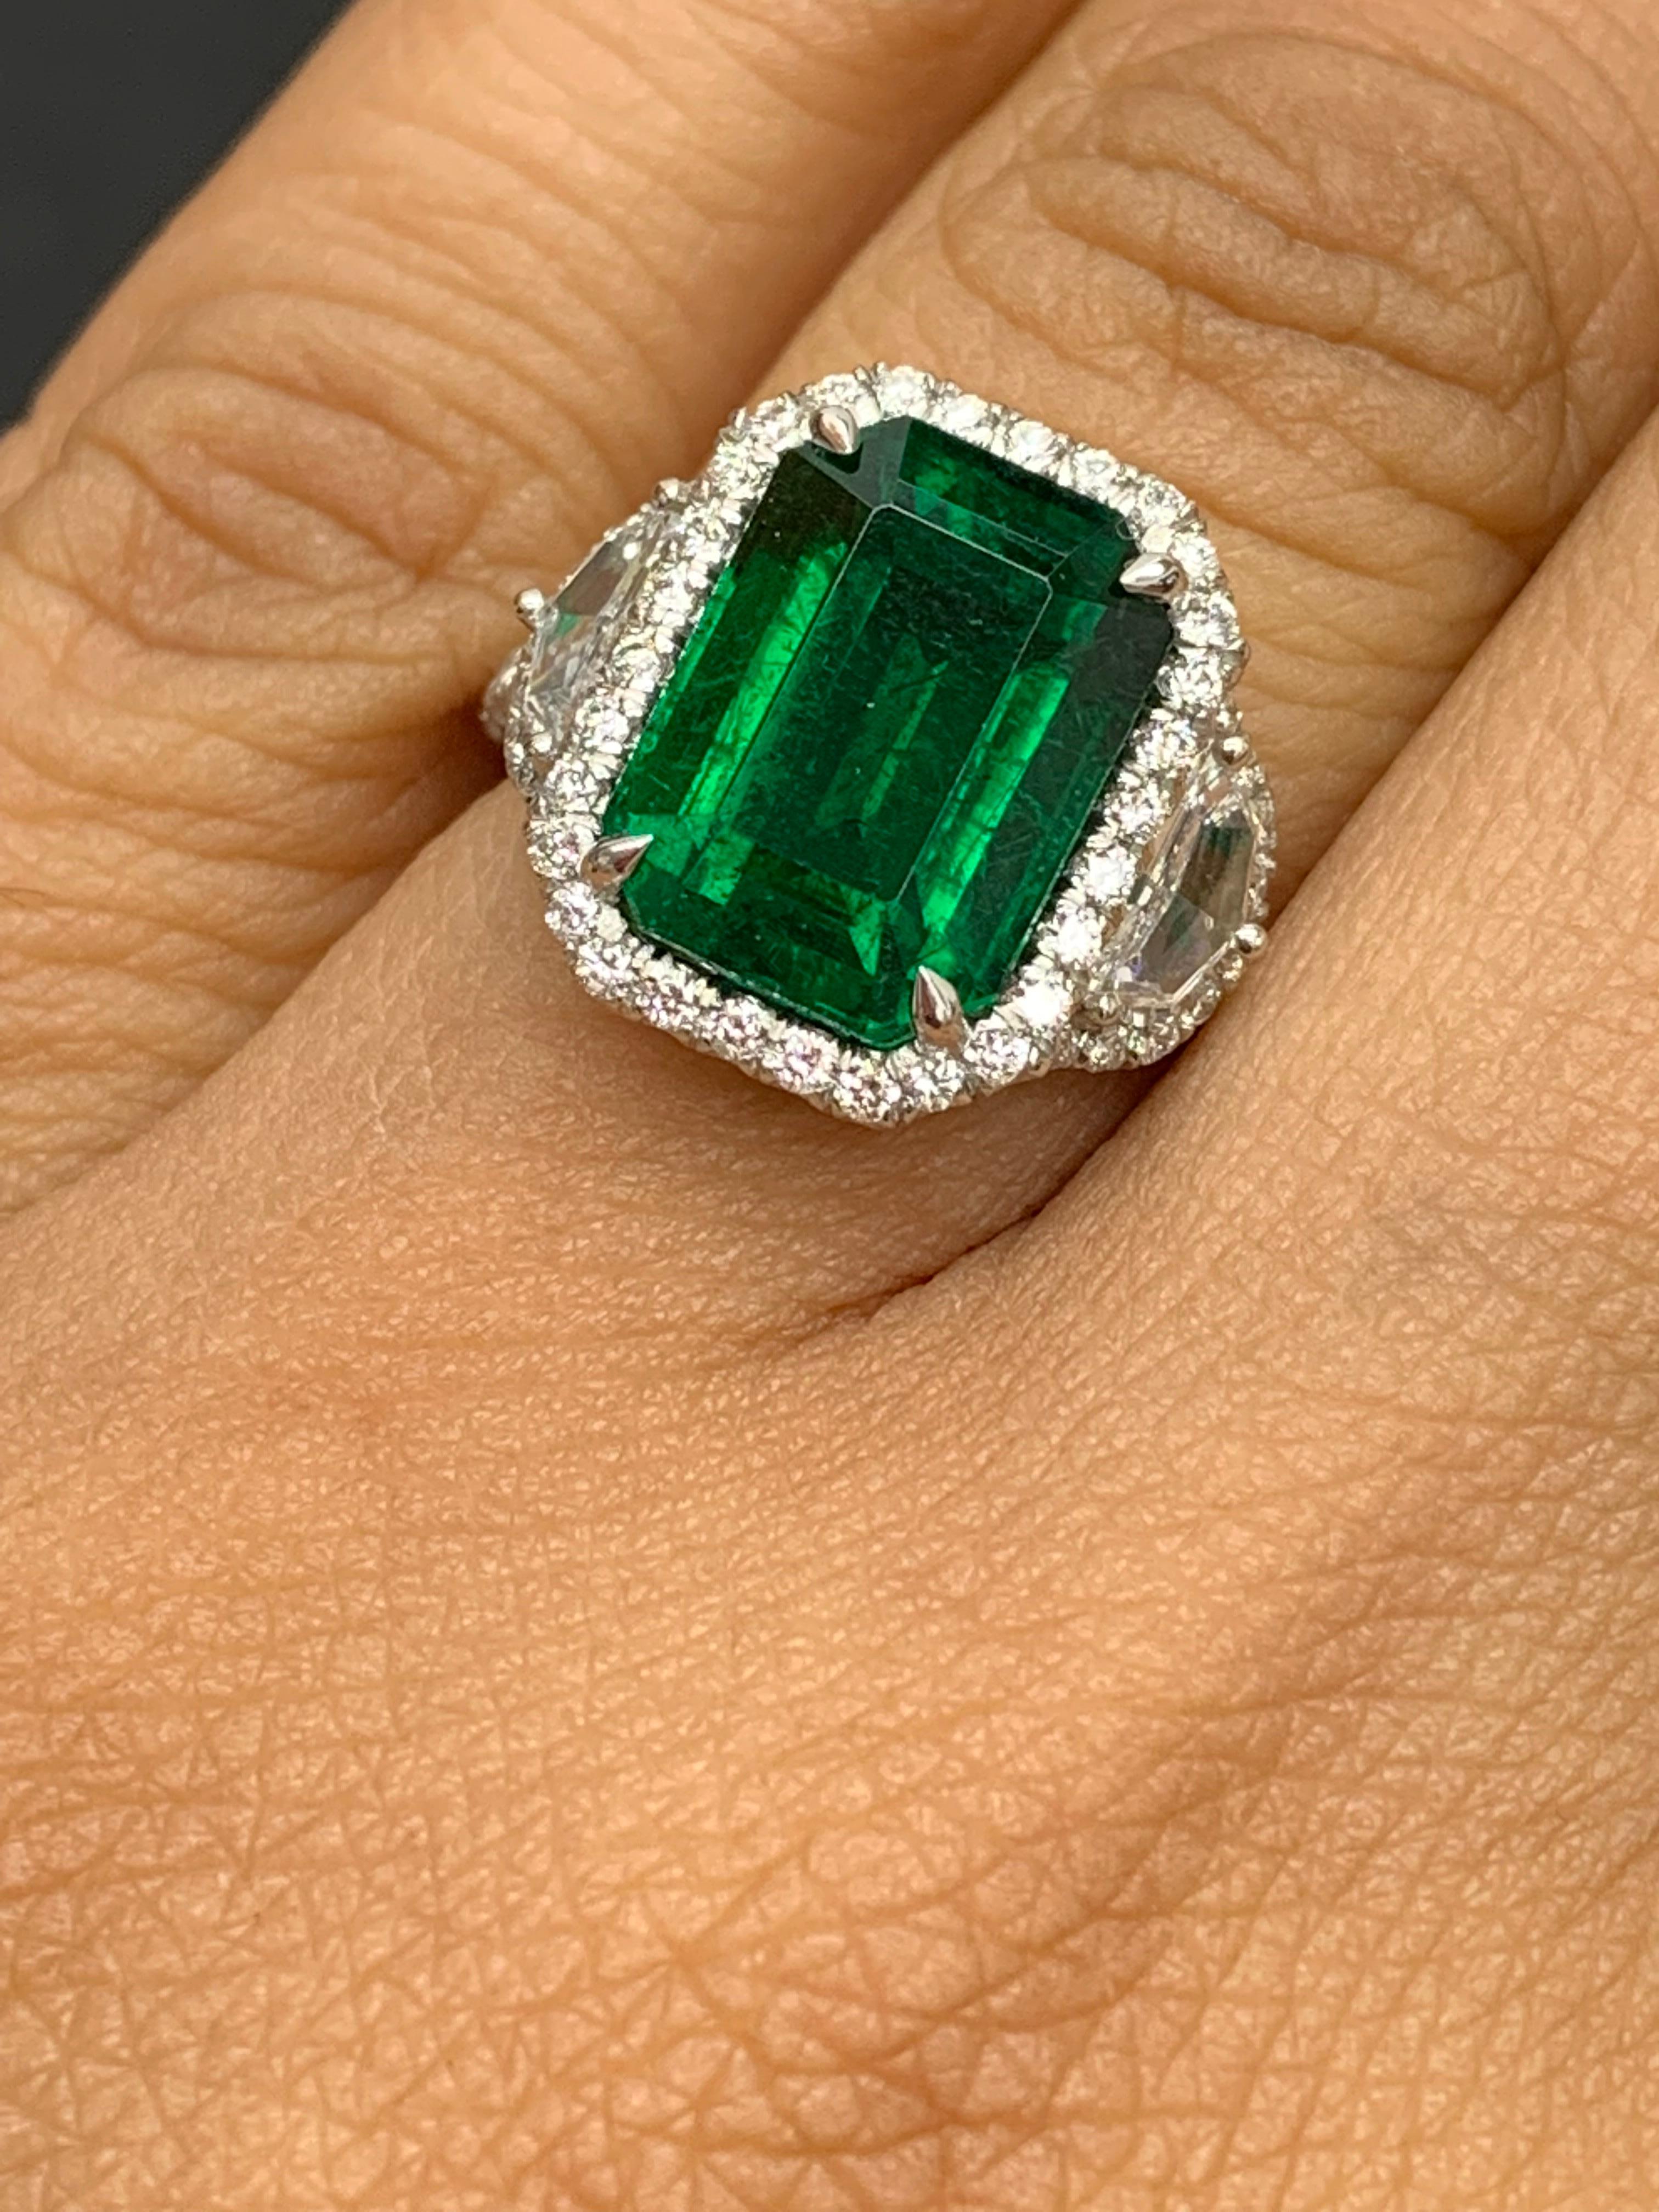 Modern GIA Certified 4.07 Carat Emerald Cut Emerald Diamond 3 Stone Ring in Platinum For Sale